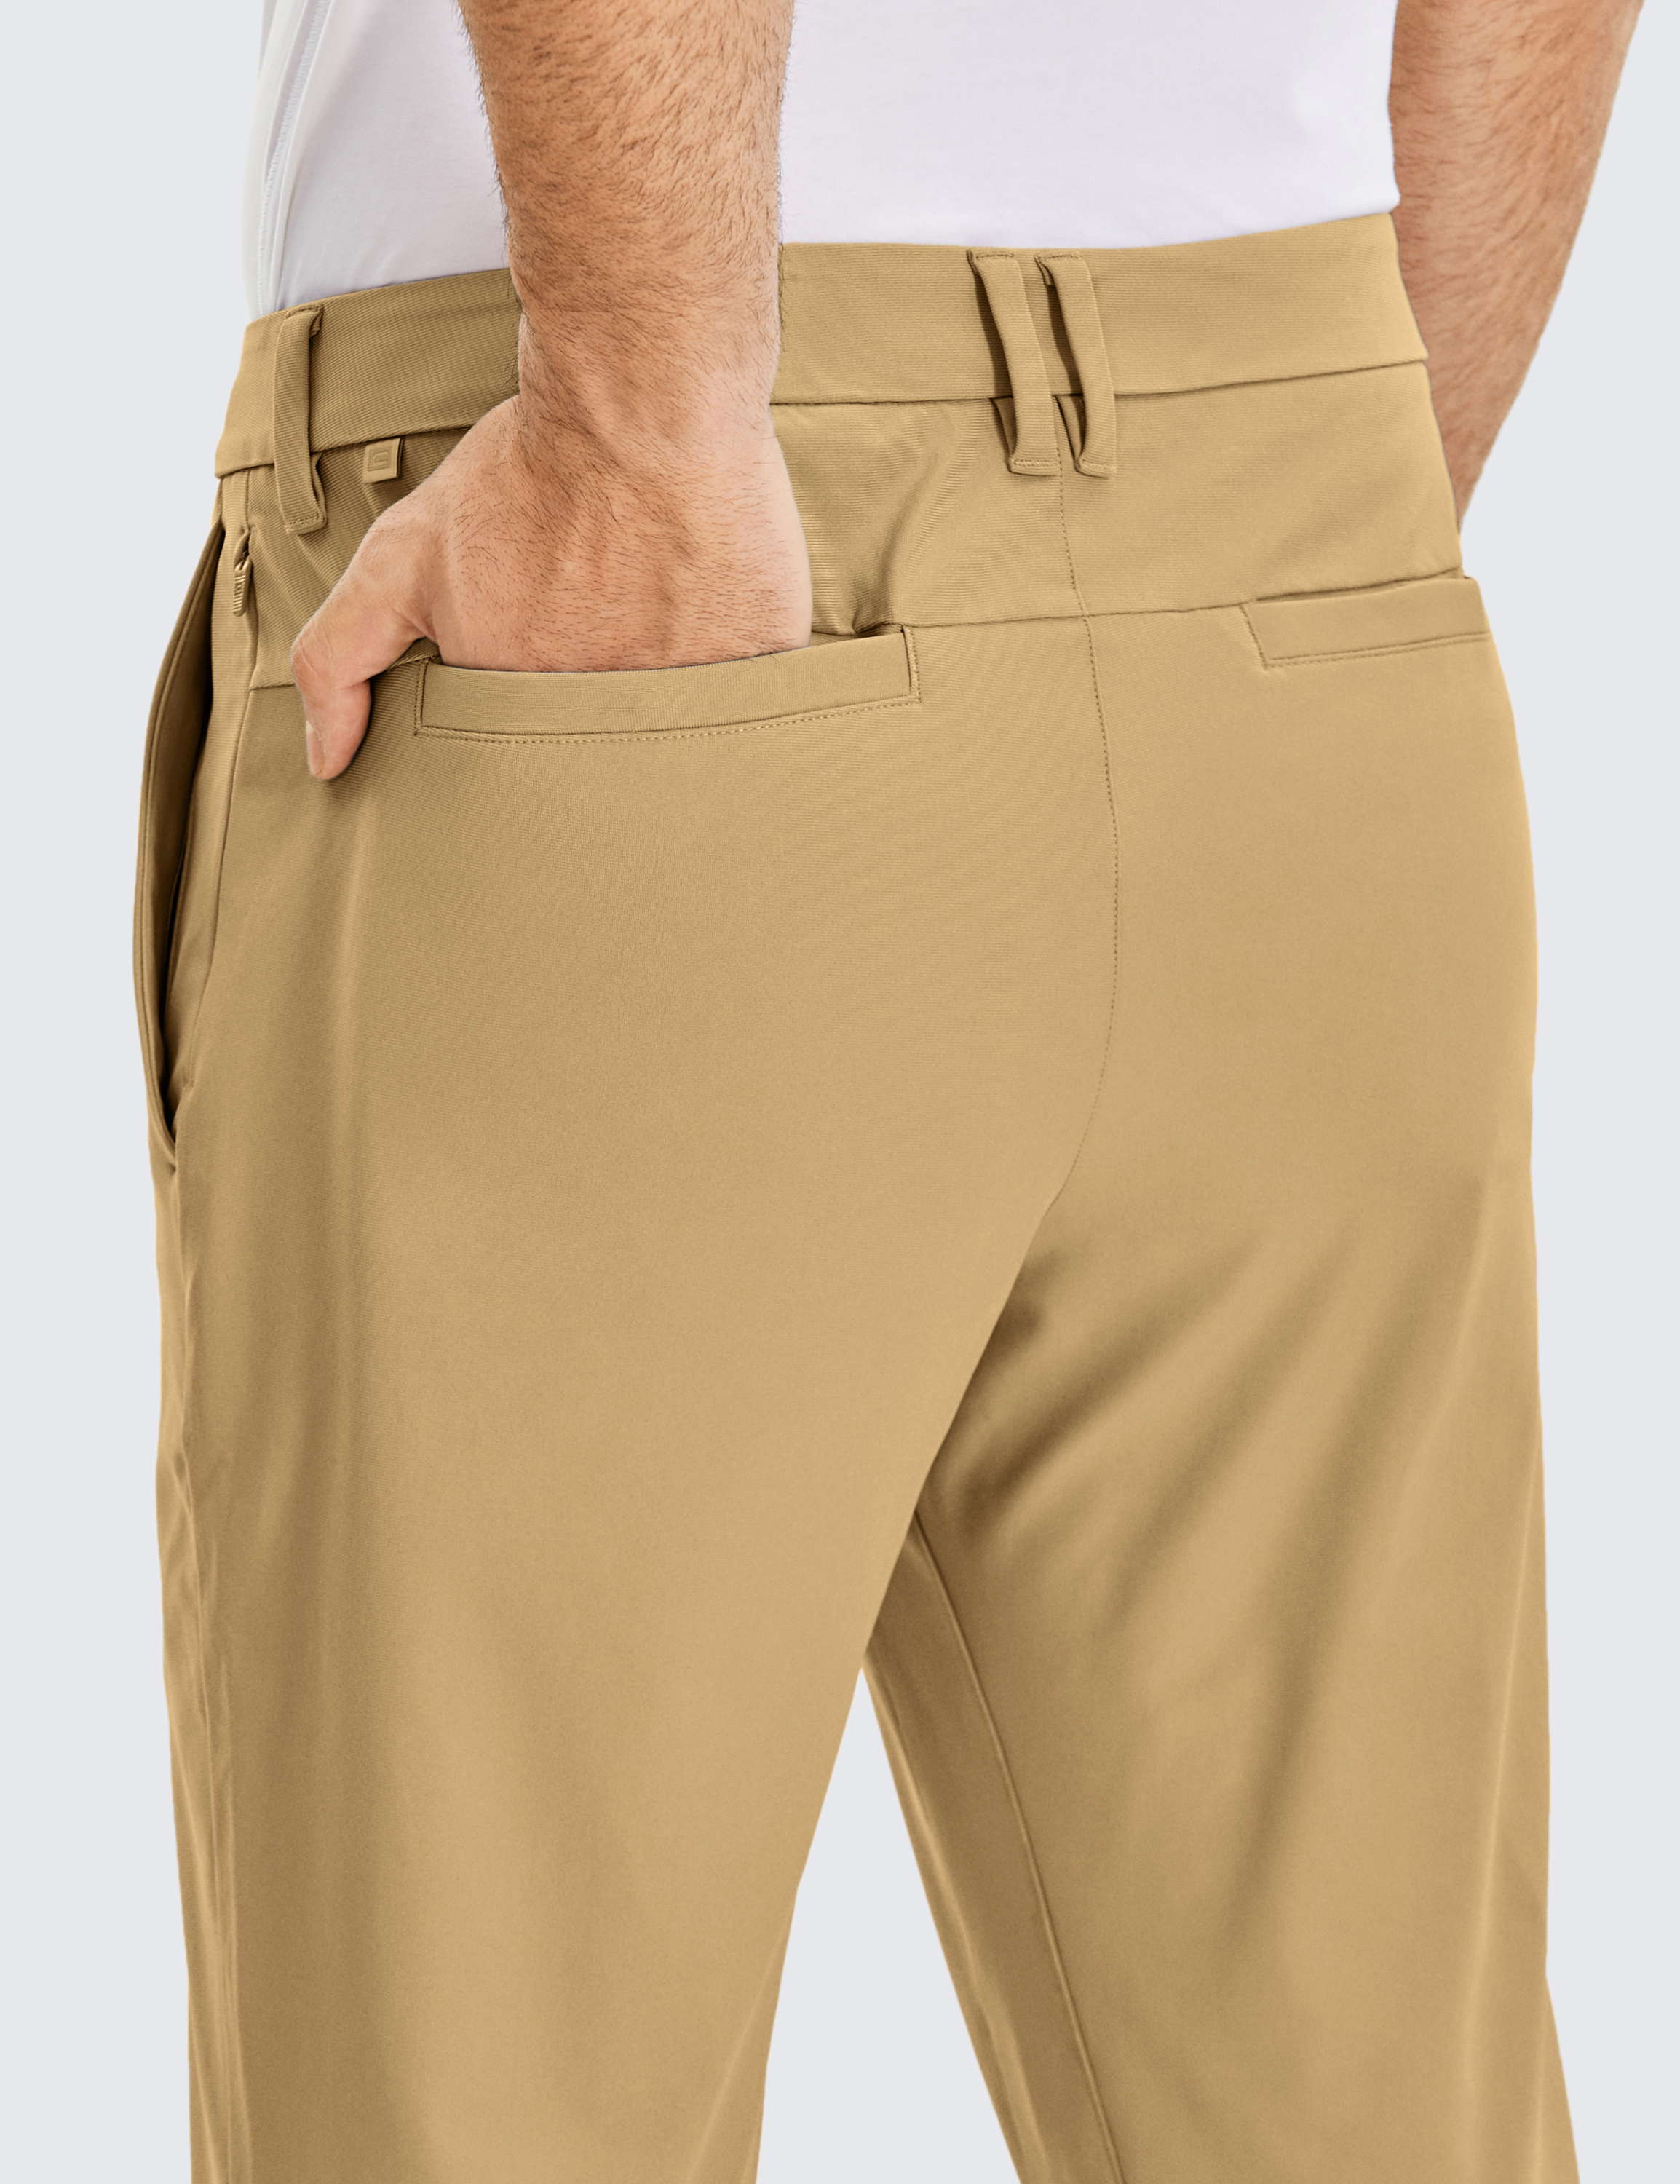 CRZ YOGA, Pants, Mens Khaki Crz Yoga Golf Pant